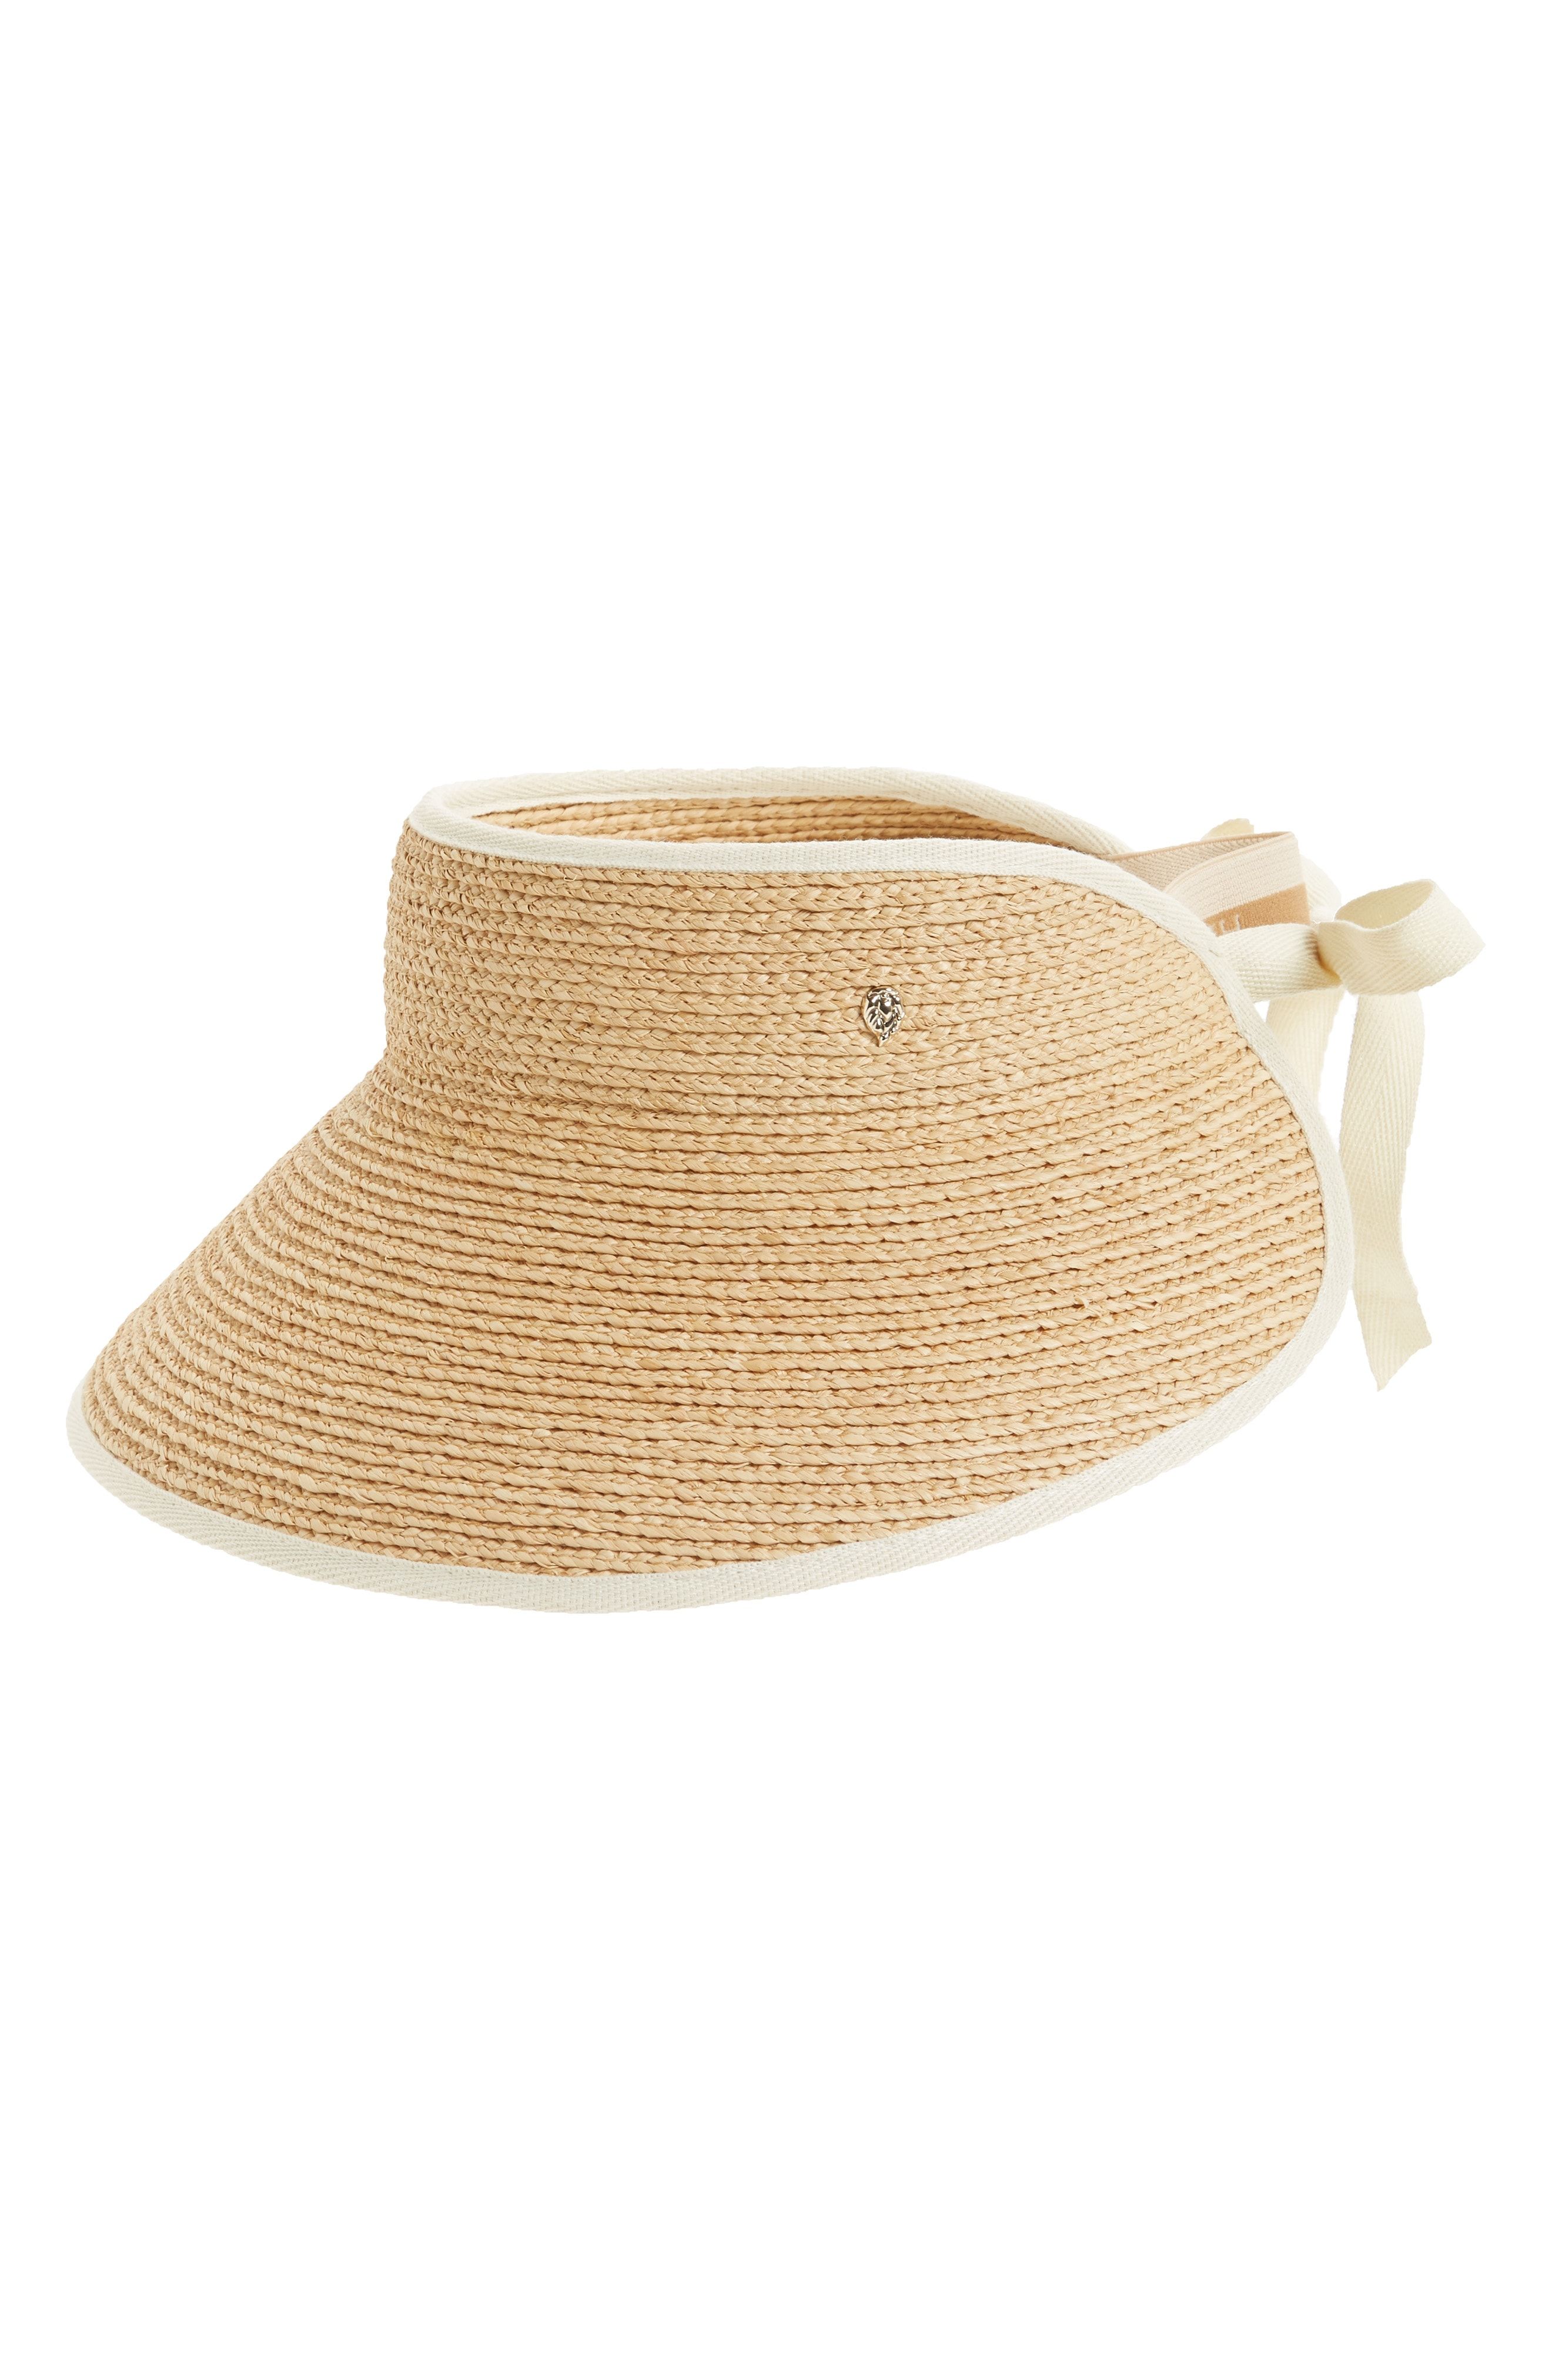 Strap Included Evolatree Packable Summer Beach Sun Hat Flexible Wide Wire Brim